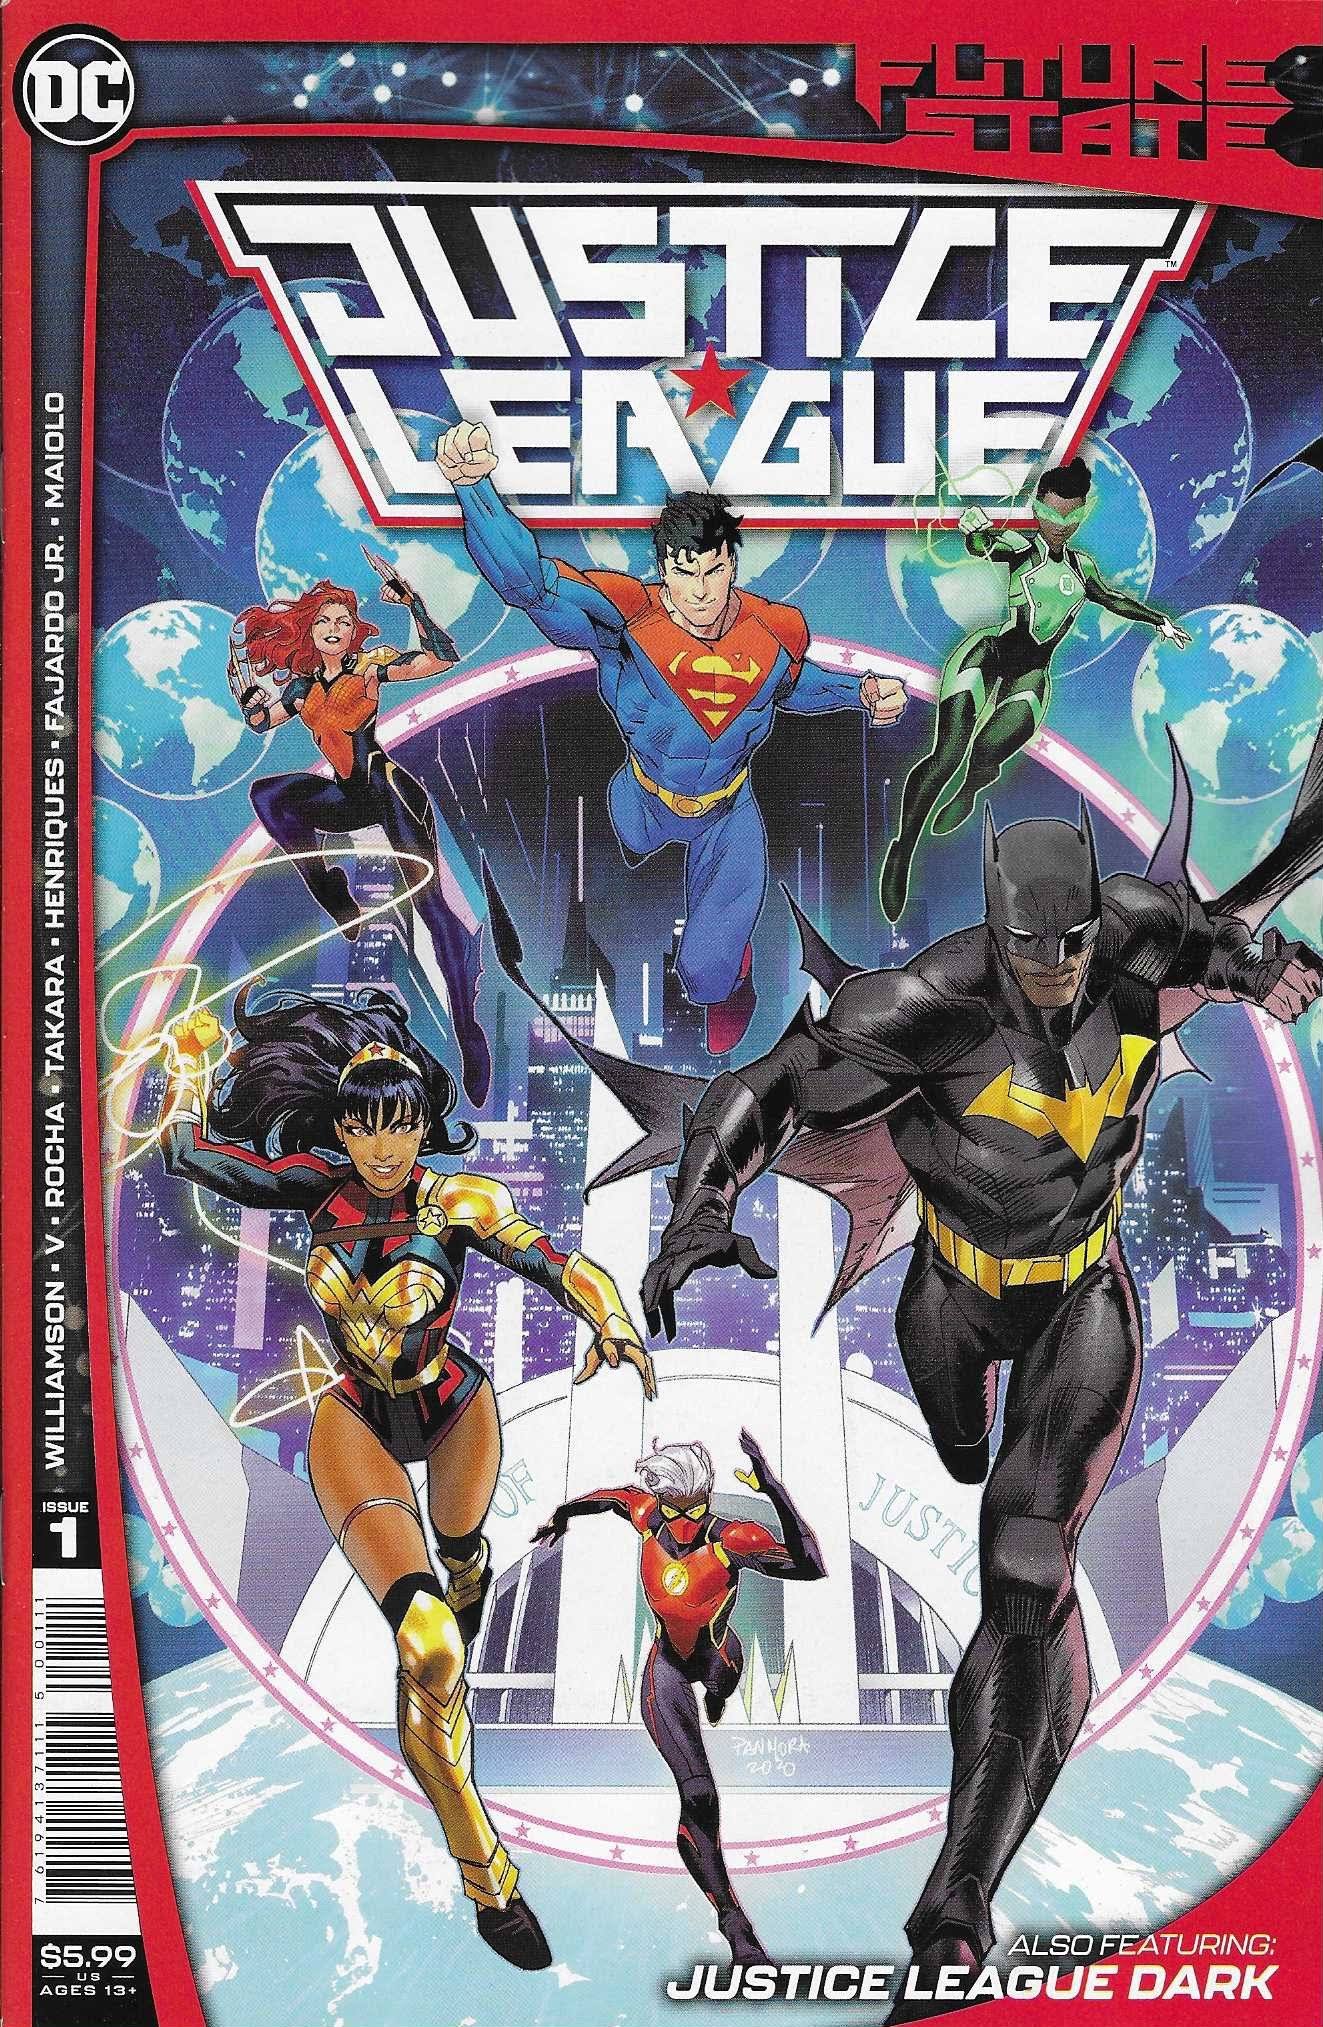 Future State Justice League #1